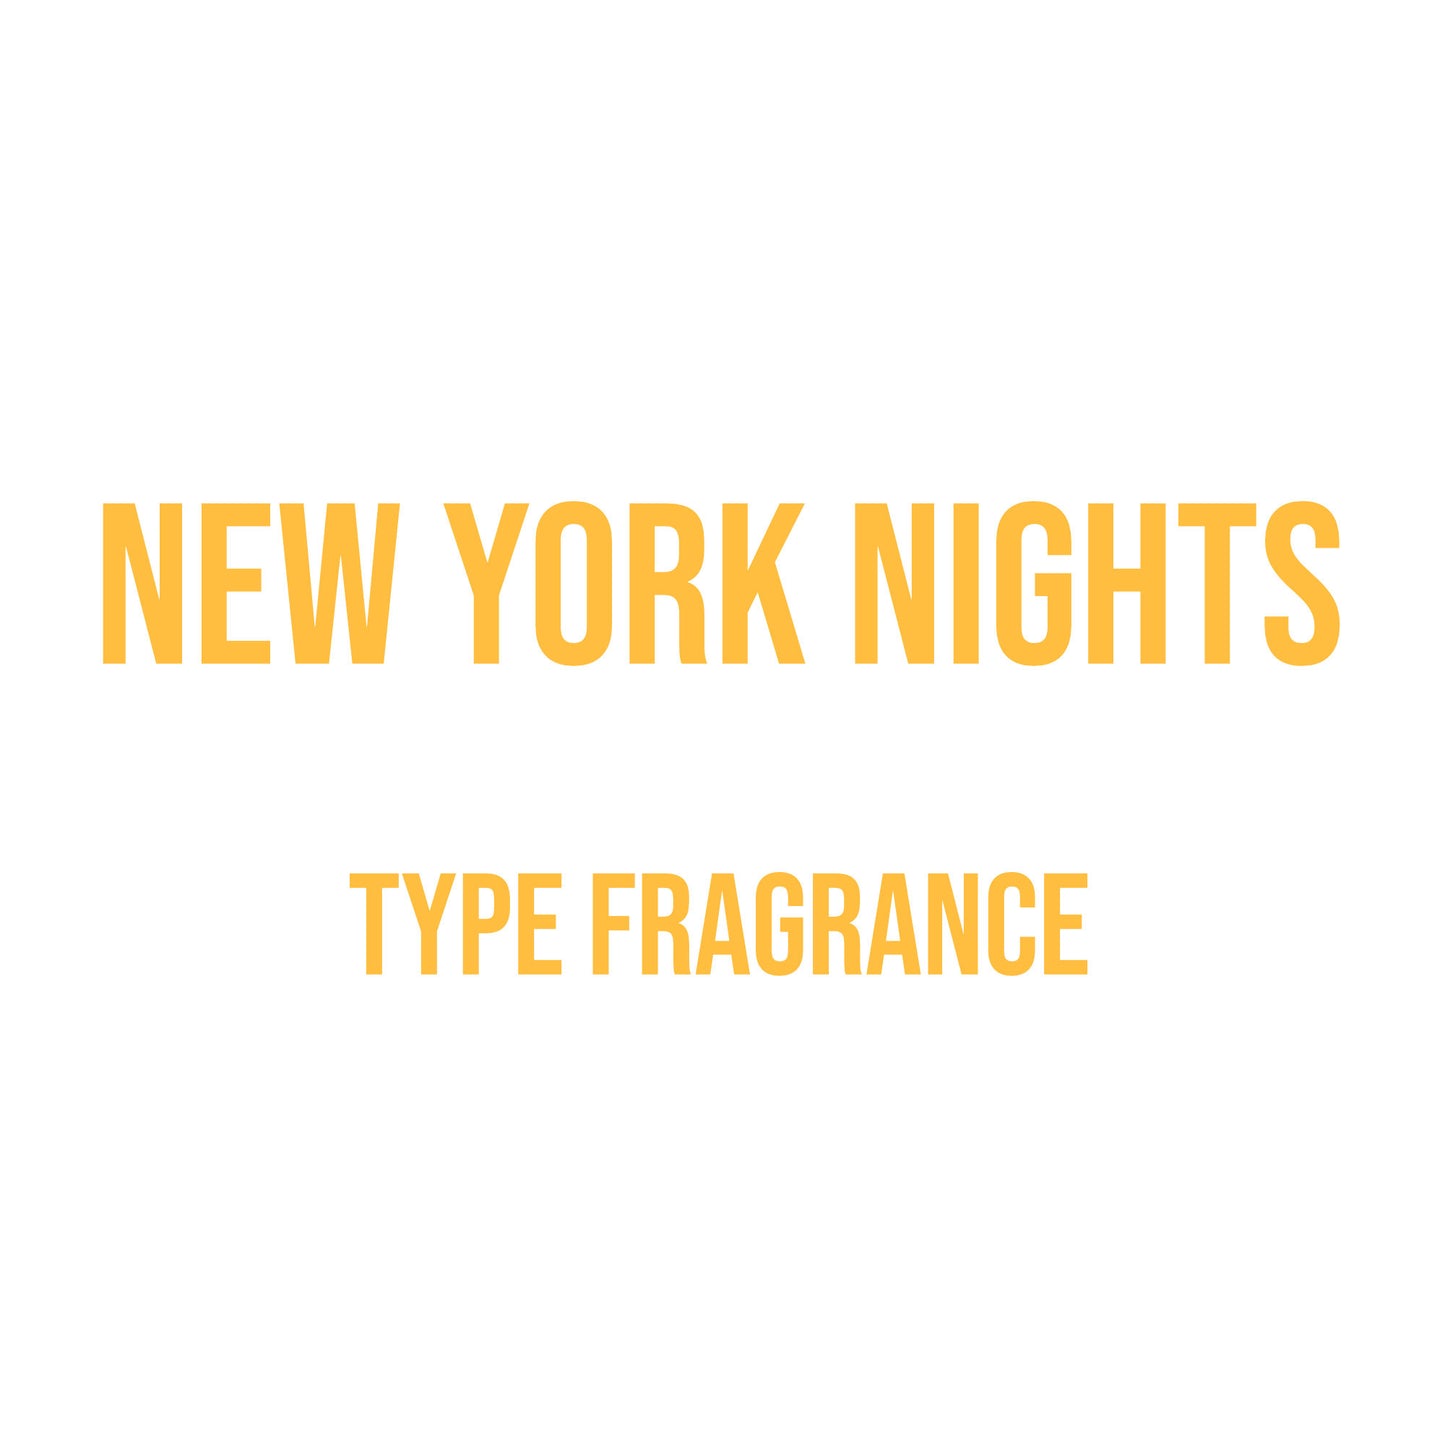 New York Nights Type Fragrance